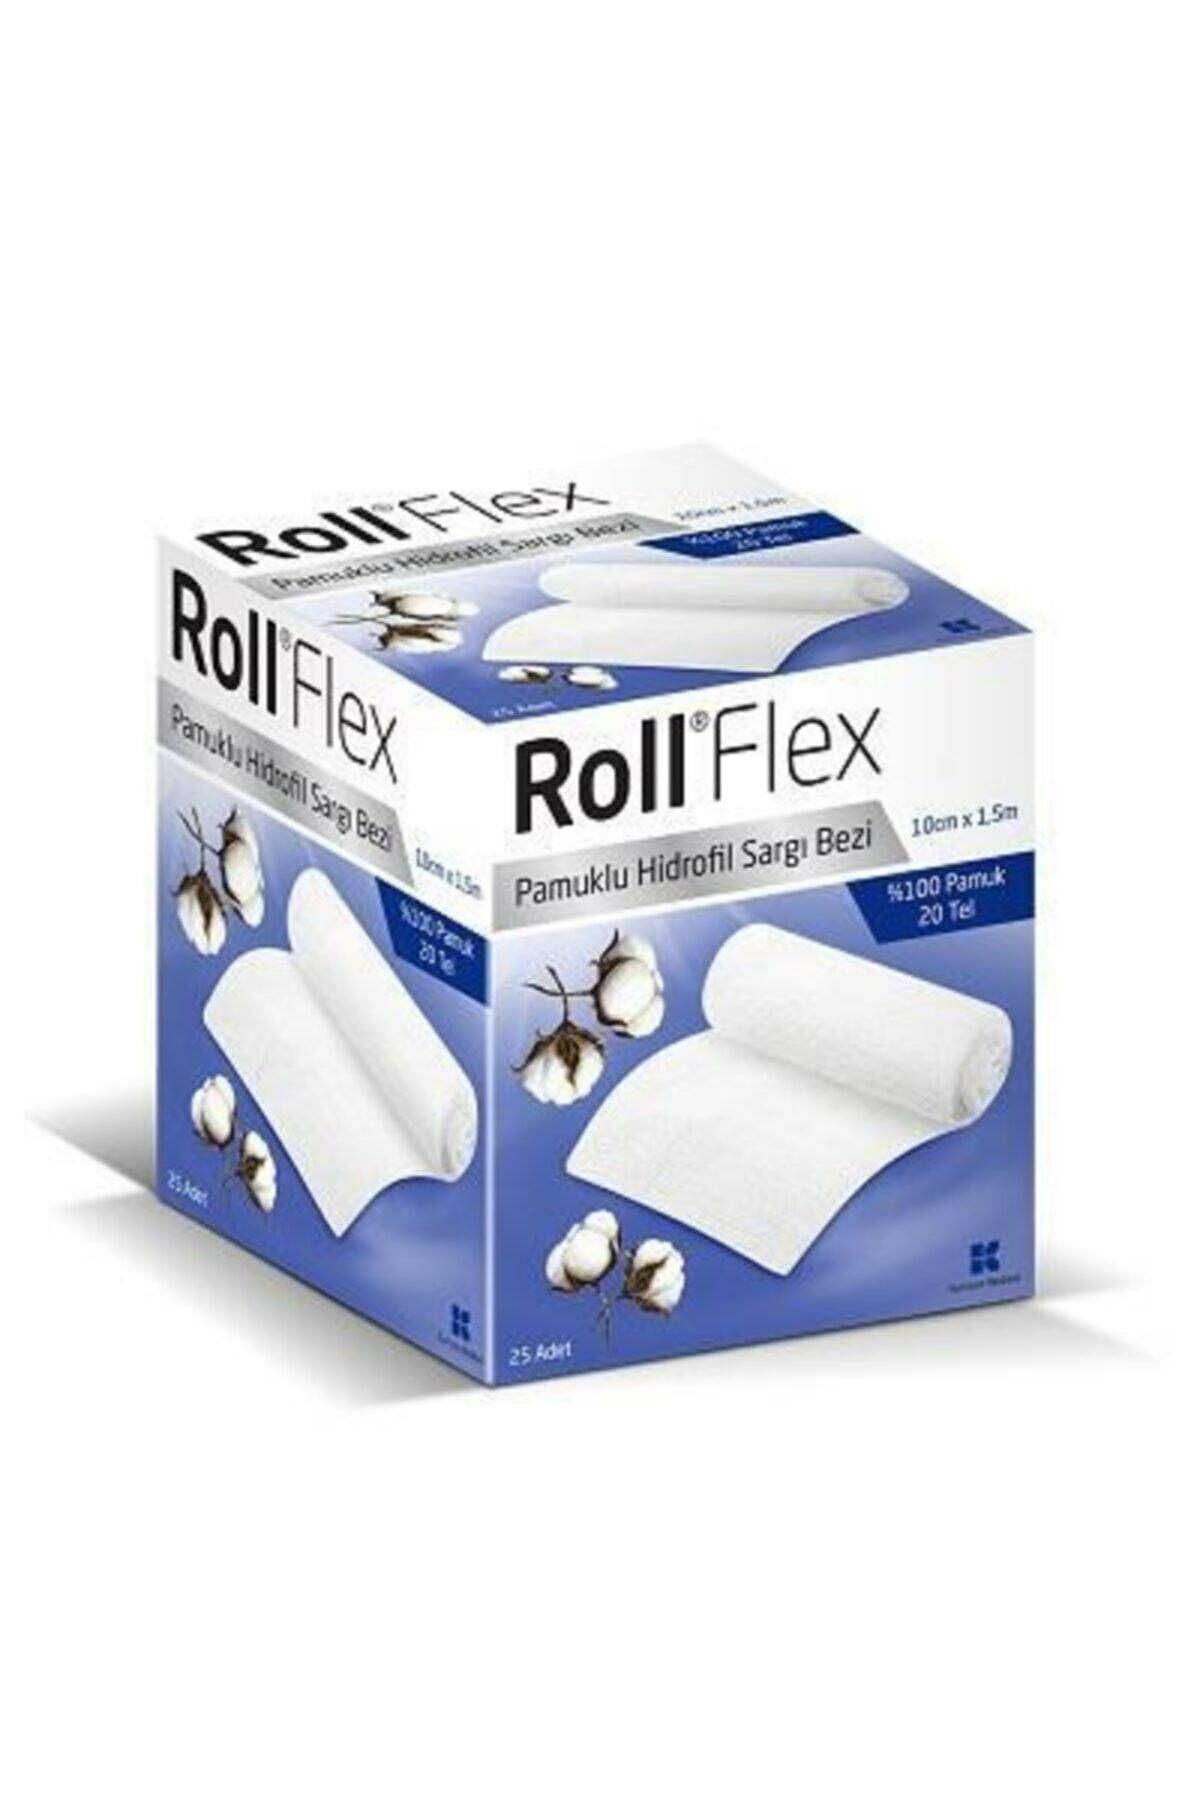 Roll Flex Sargı Bezi 10 Cm X 1,5 M